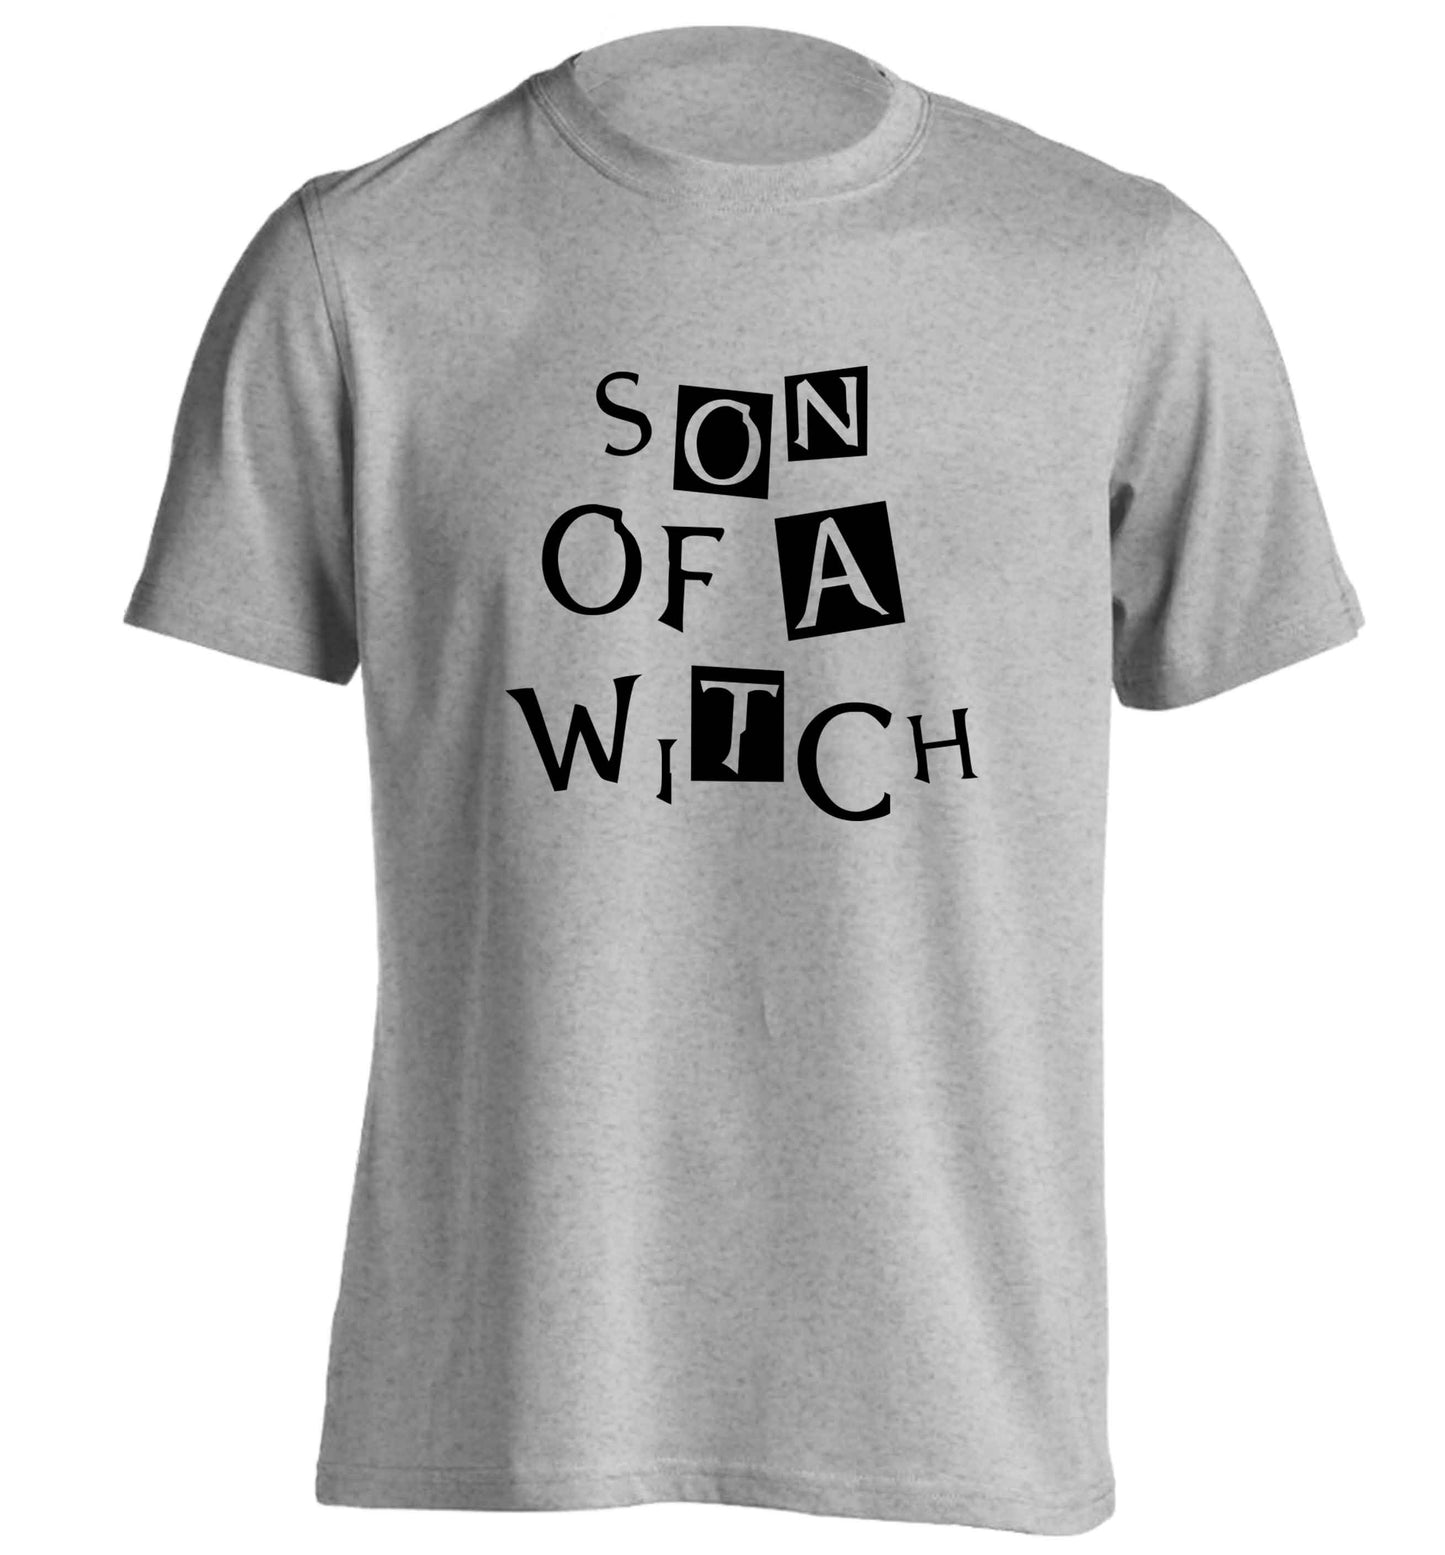 Son of a witch adults unisex grey Tshirt 2XL